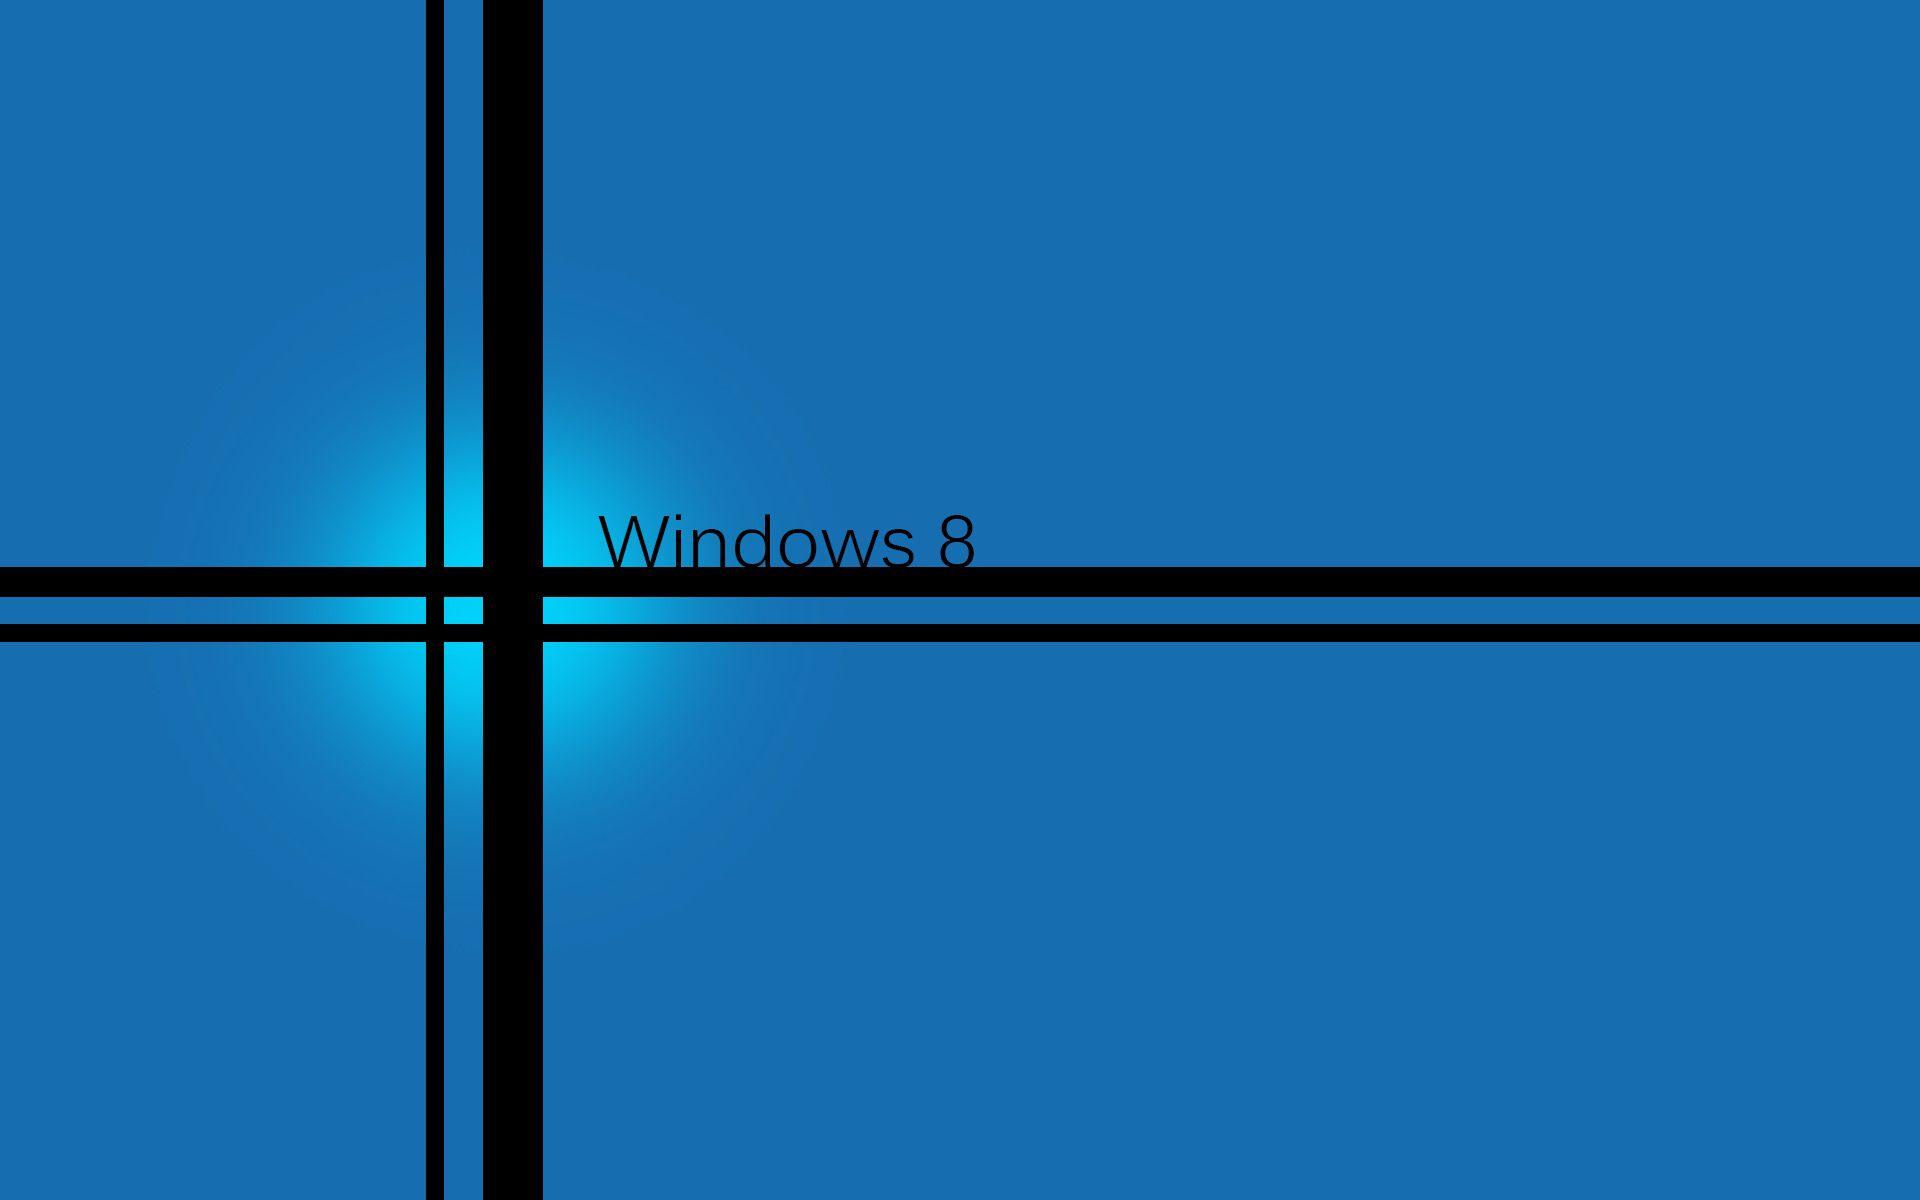 Windows 8 Wallpaper, Picture, Image